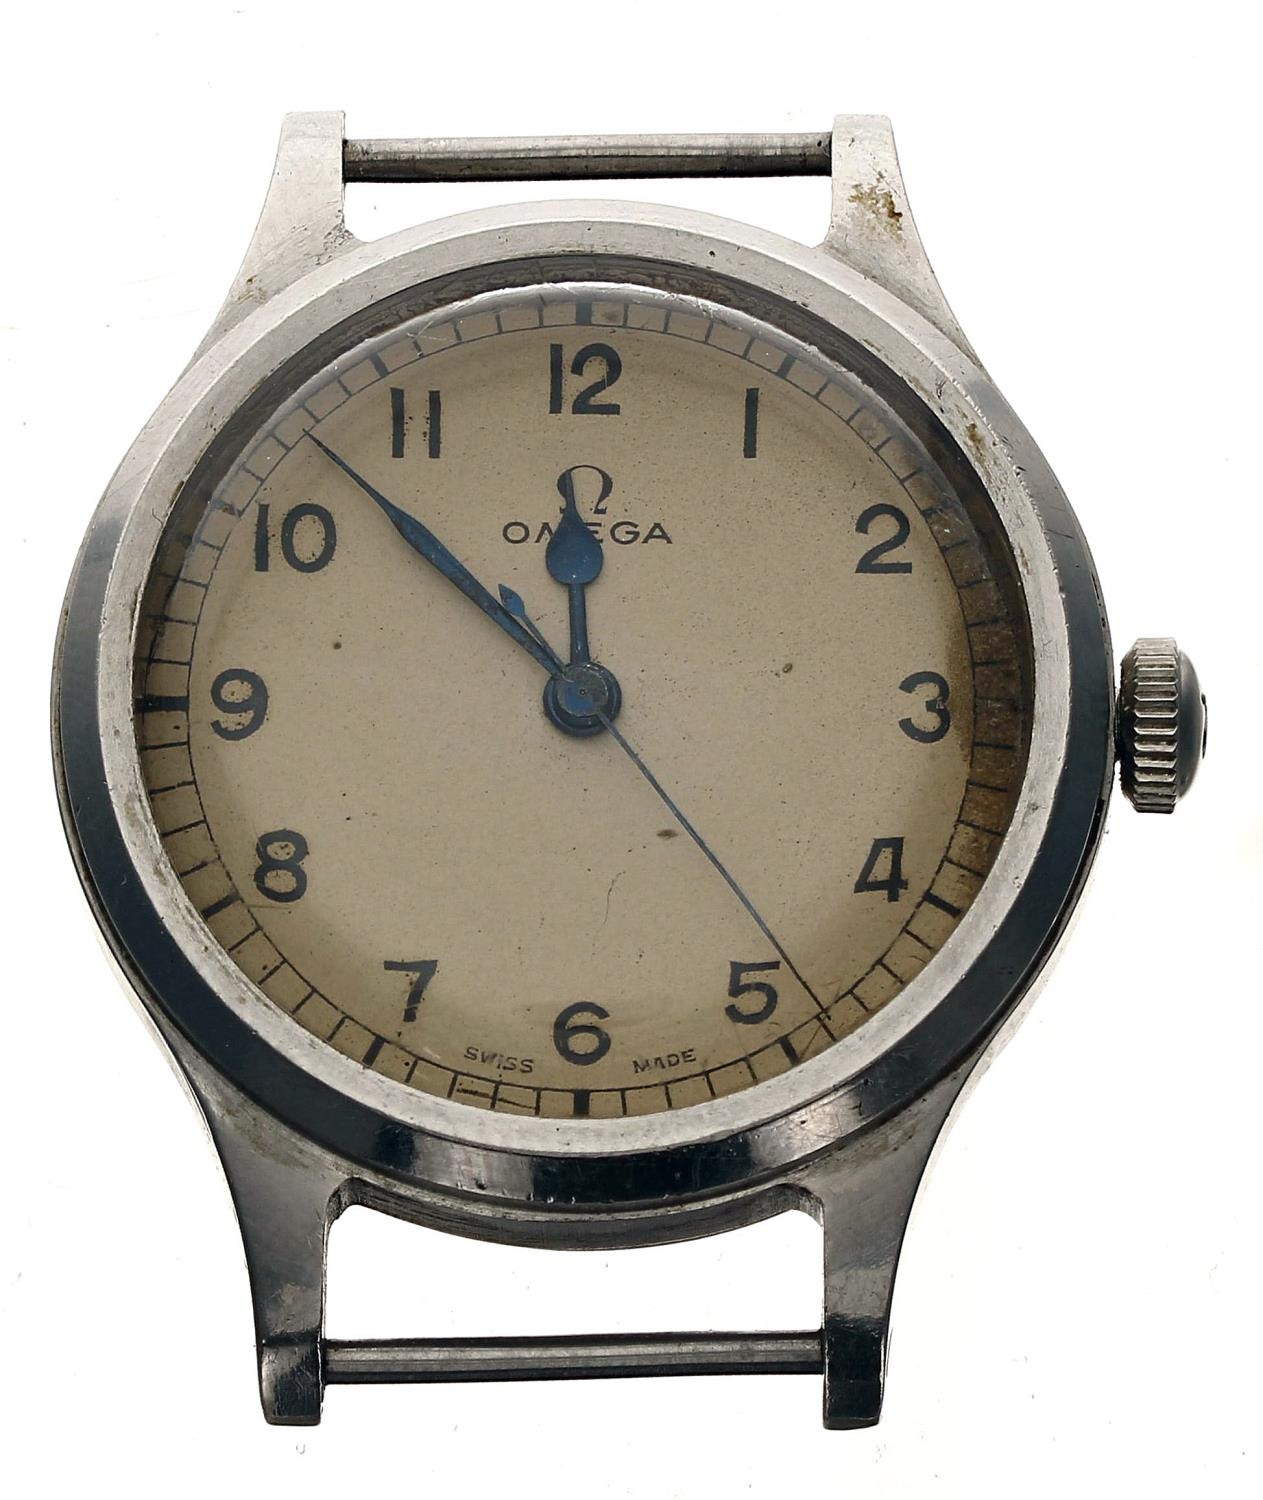 Omega British Military R.A.F. Pilot's wristwatch, serial no. 9818629, circa 1956, signed circular